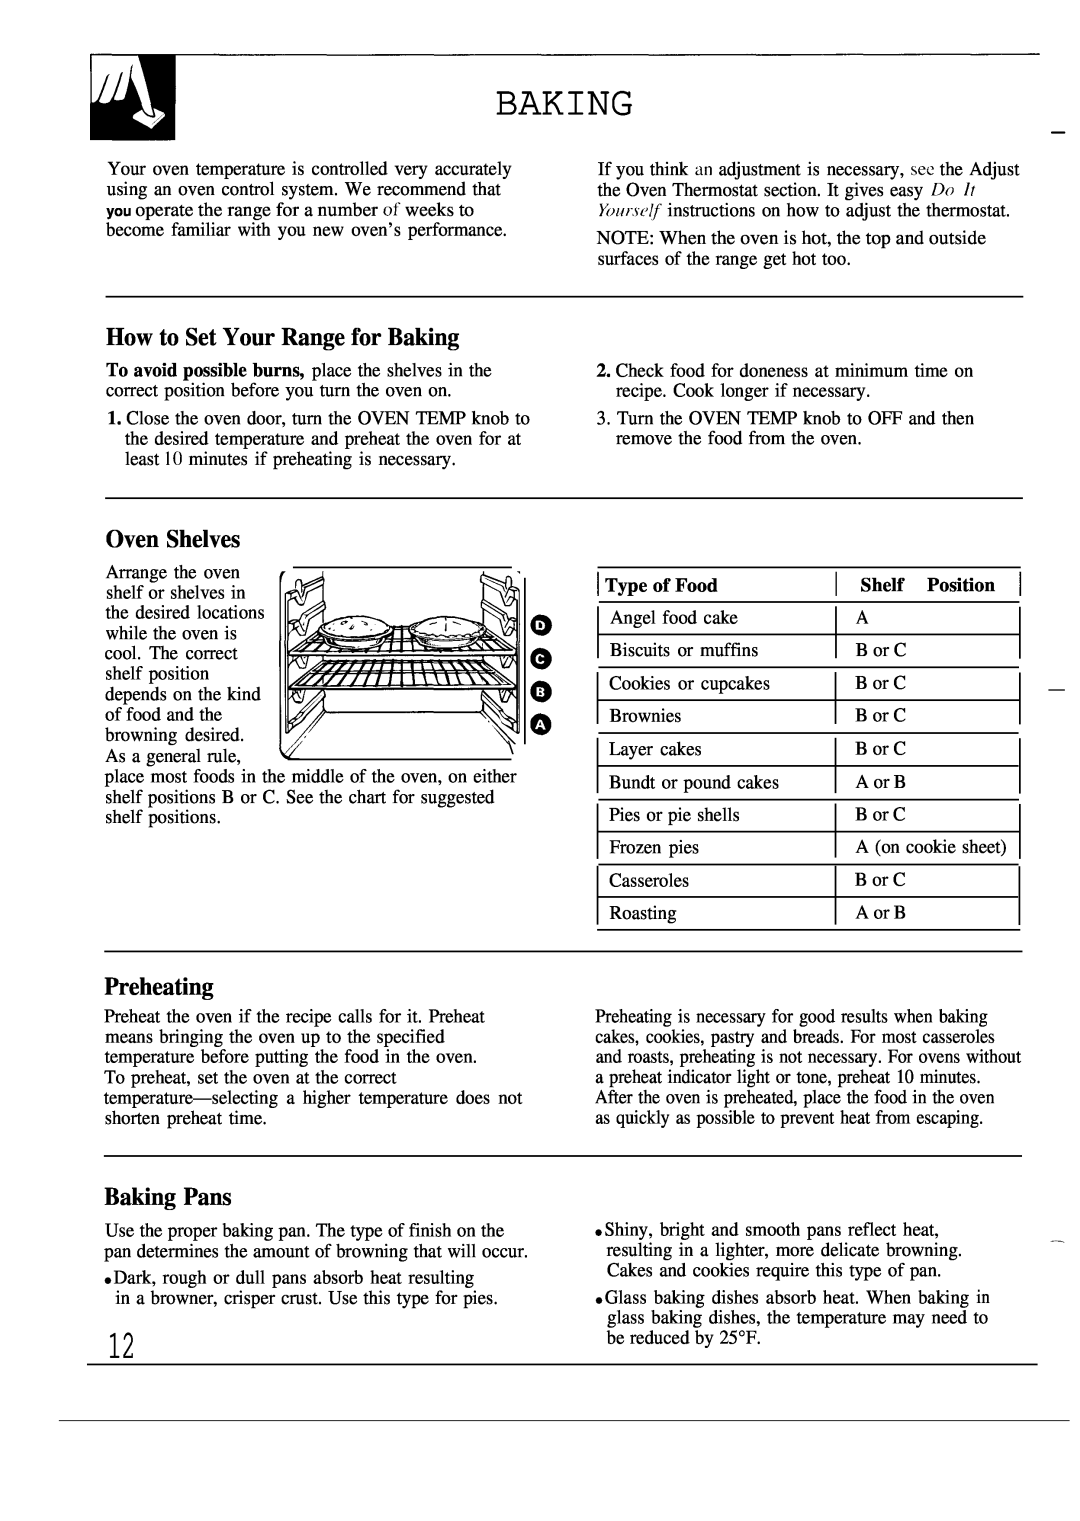 GE JGSC12 How to Set Your Range for Baking, Oven Shelves, Preheating, Baking Pans, I Type of Food, Shelf Position 